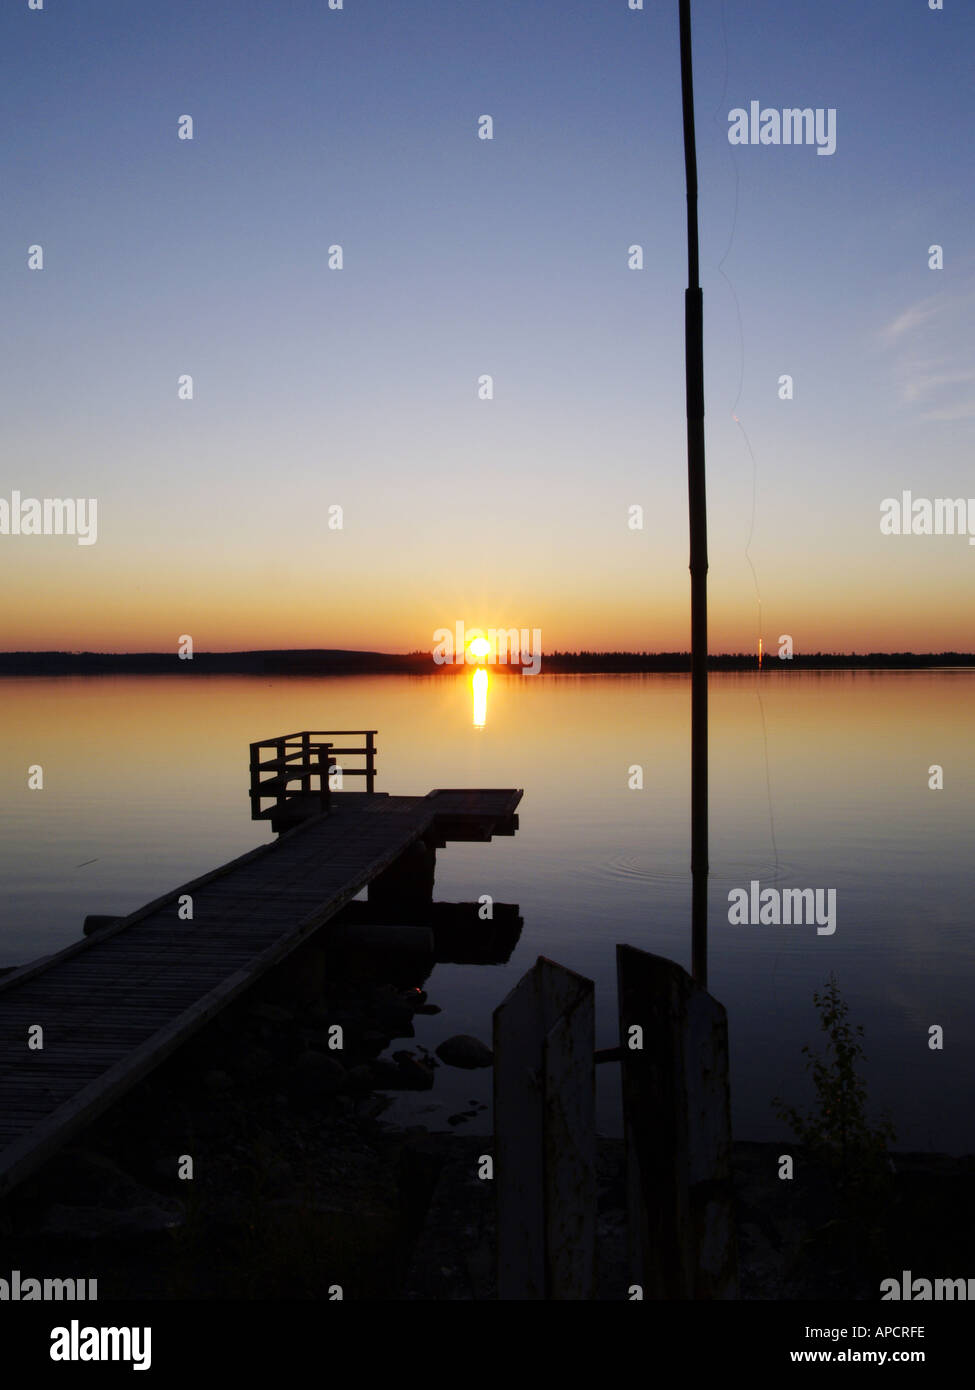 evening ambiance at lake Kiantajärvi Stock Photo